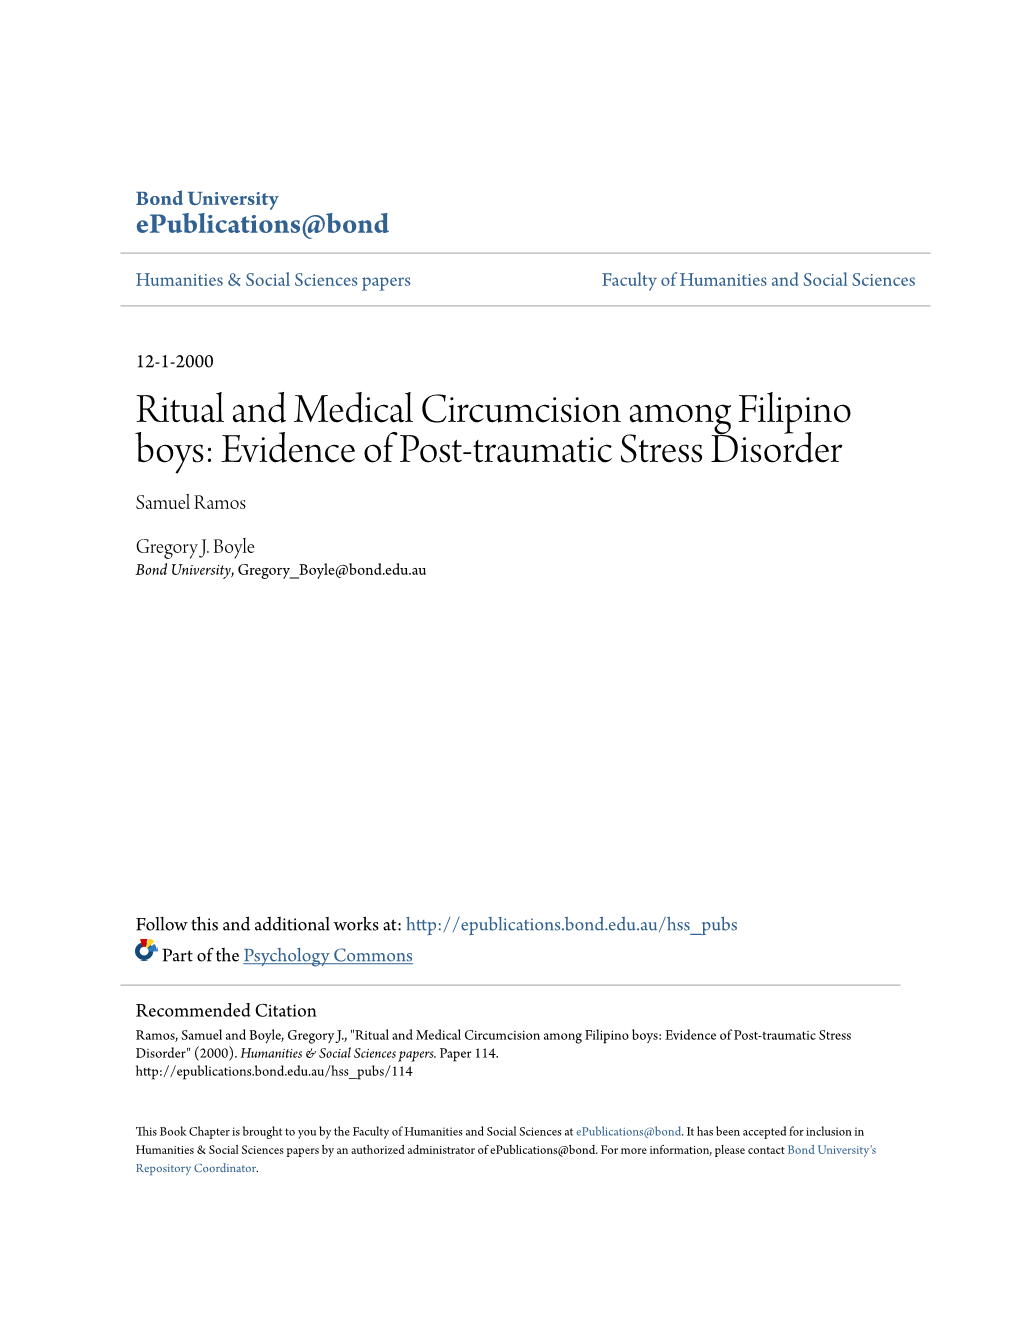 Ritual and Medical Circumcision Among Filipino Boys: Evidence of Post-Traumatic Stress Disorder Samuel Ramos